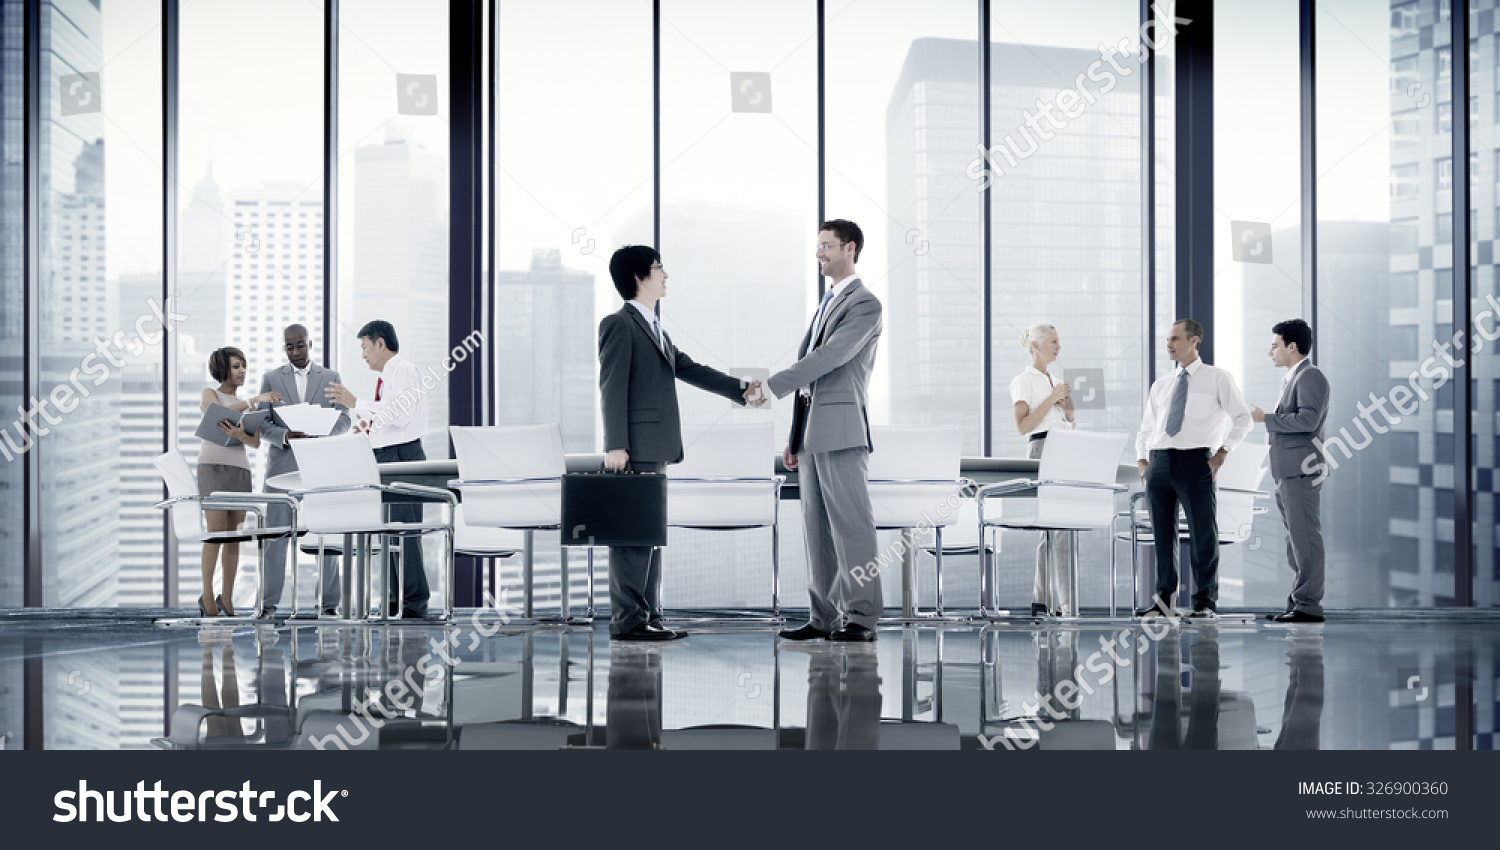 Business People Board Room Meeting Handshake Communication Concept #326900360